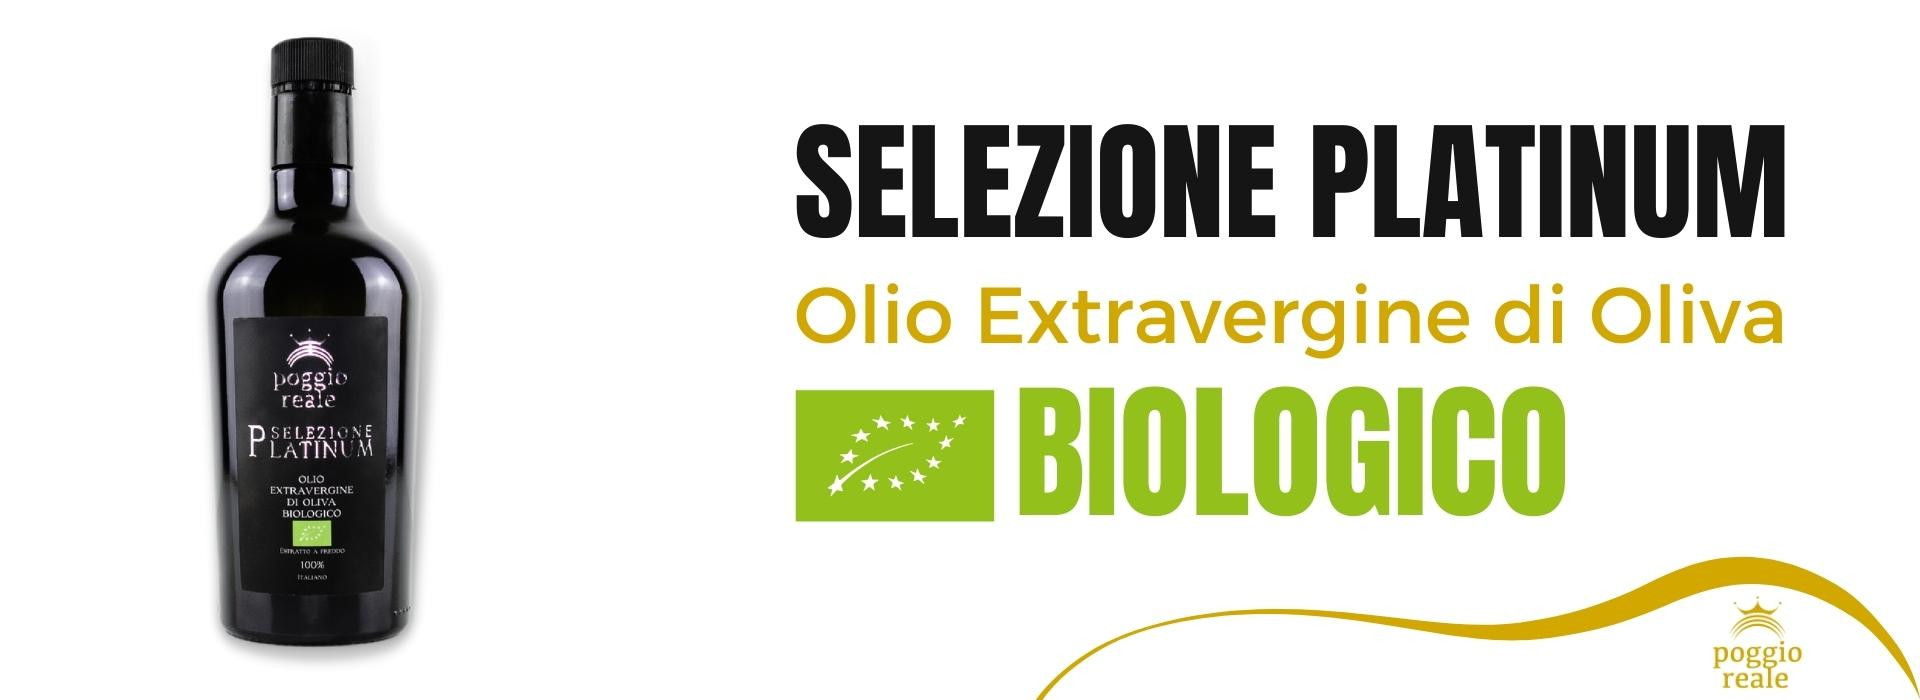 Olio extravergine di oliva Biologico Poggio Reale